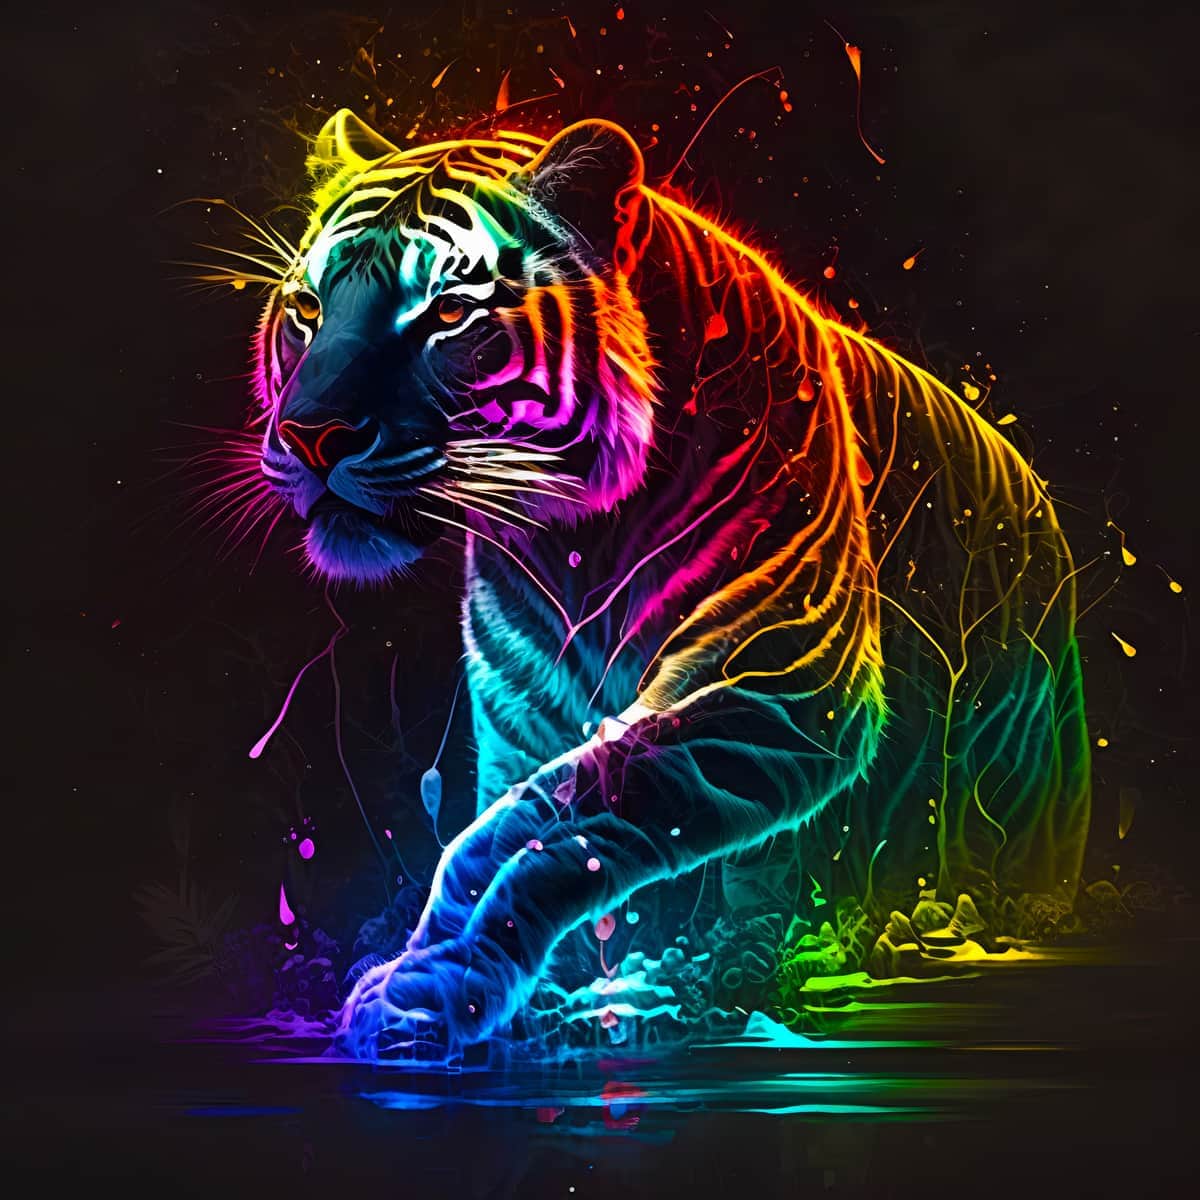 Diamond Painting - Neon Tiger - gedruckt in Ultra-HD - Quadratisch, tiere, tiger, trendbilder